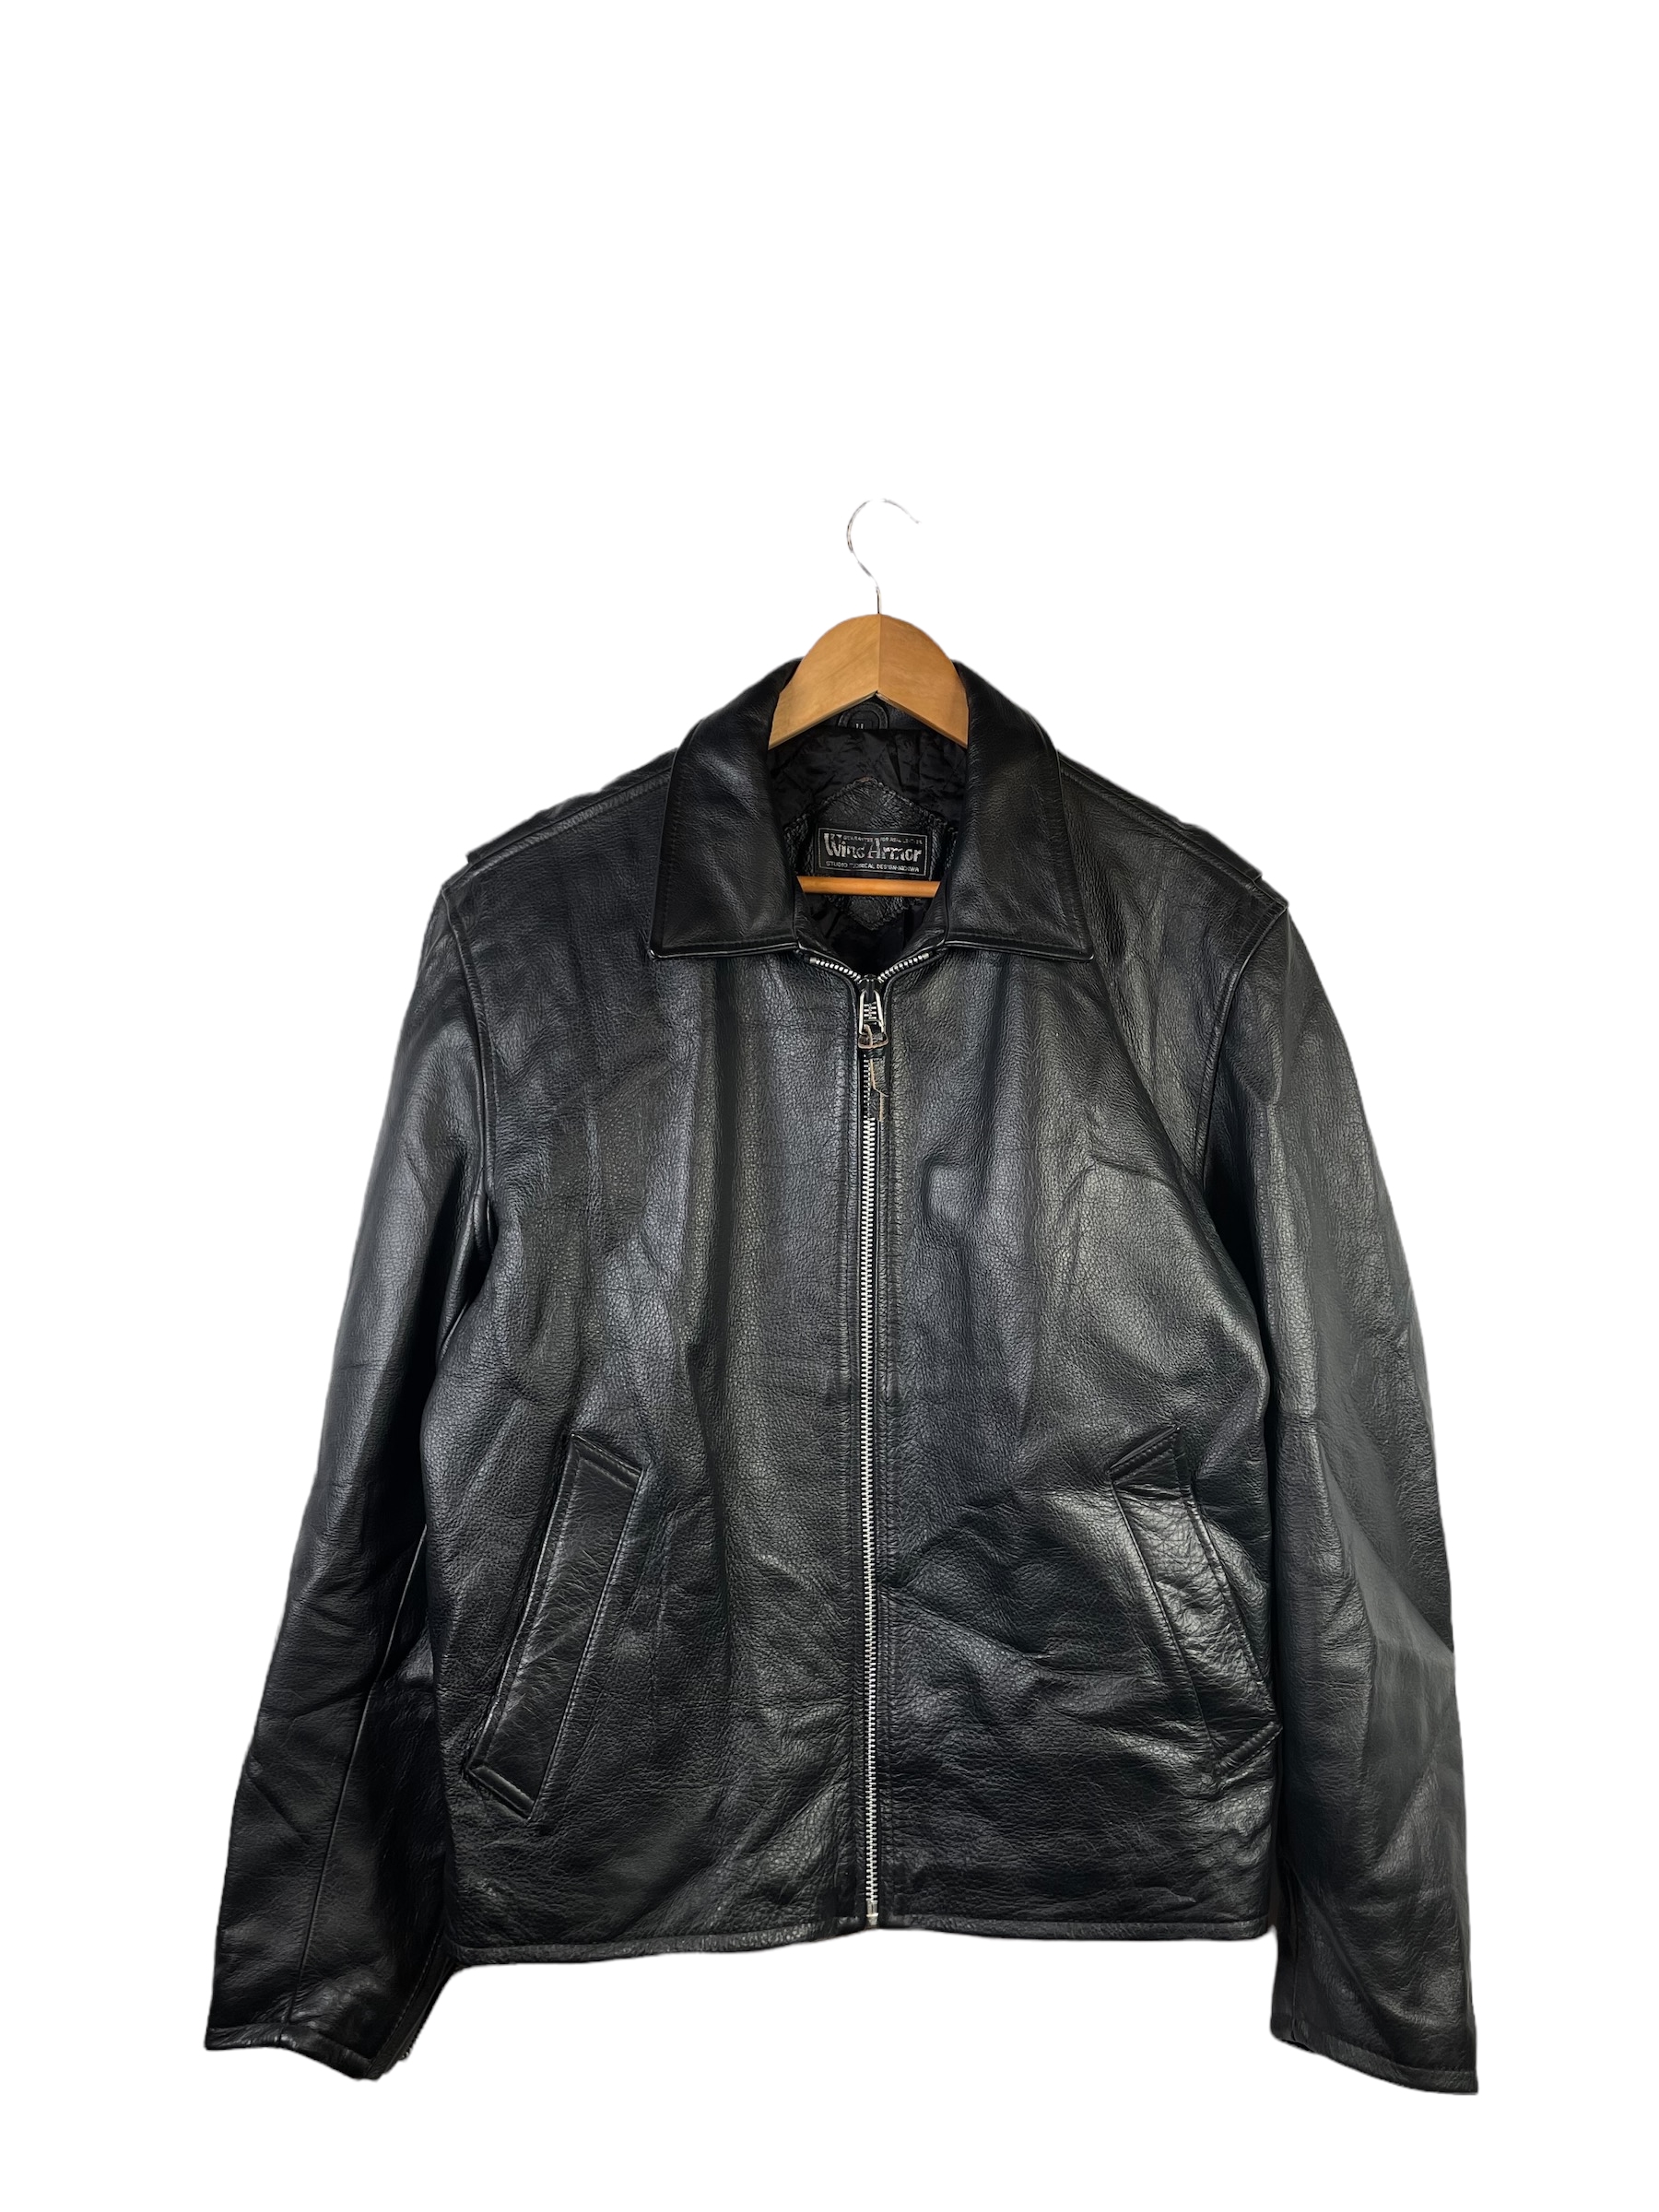 Wind Armor leather jacket